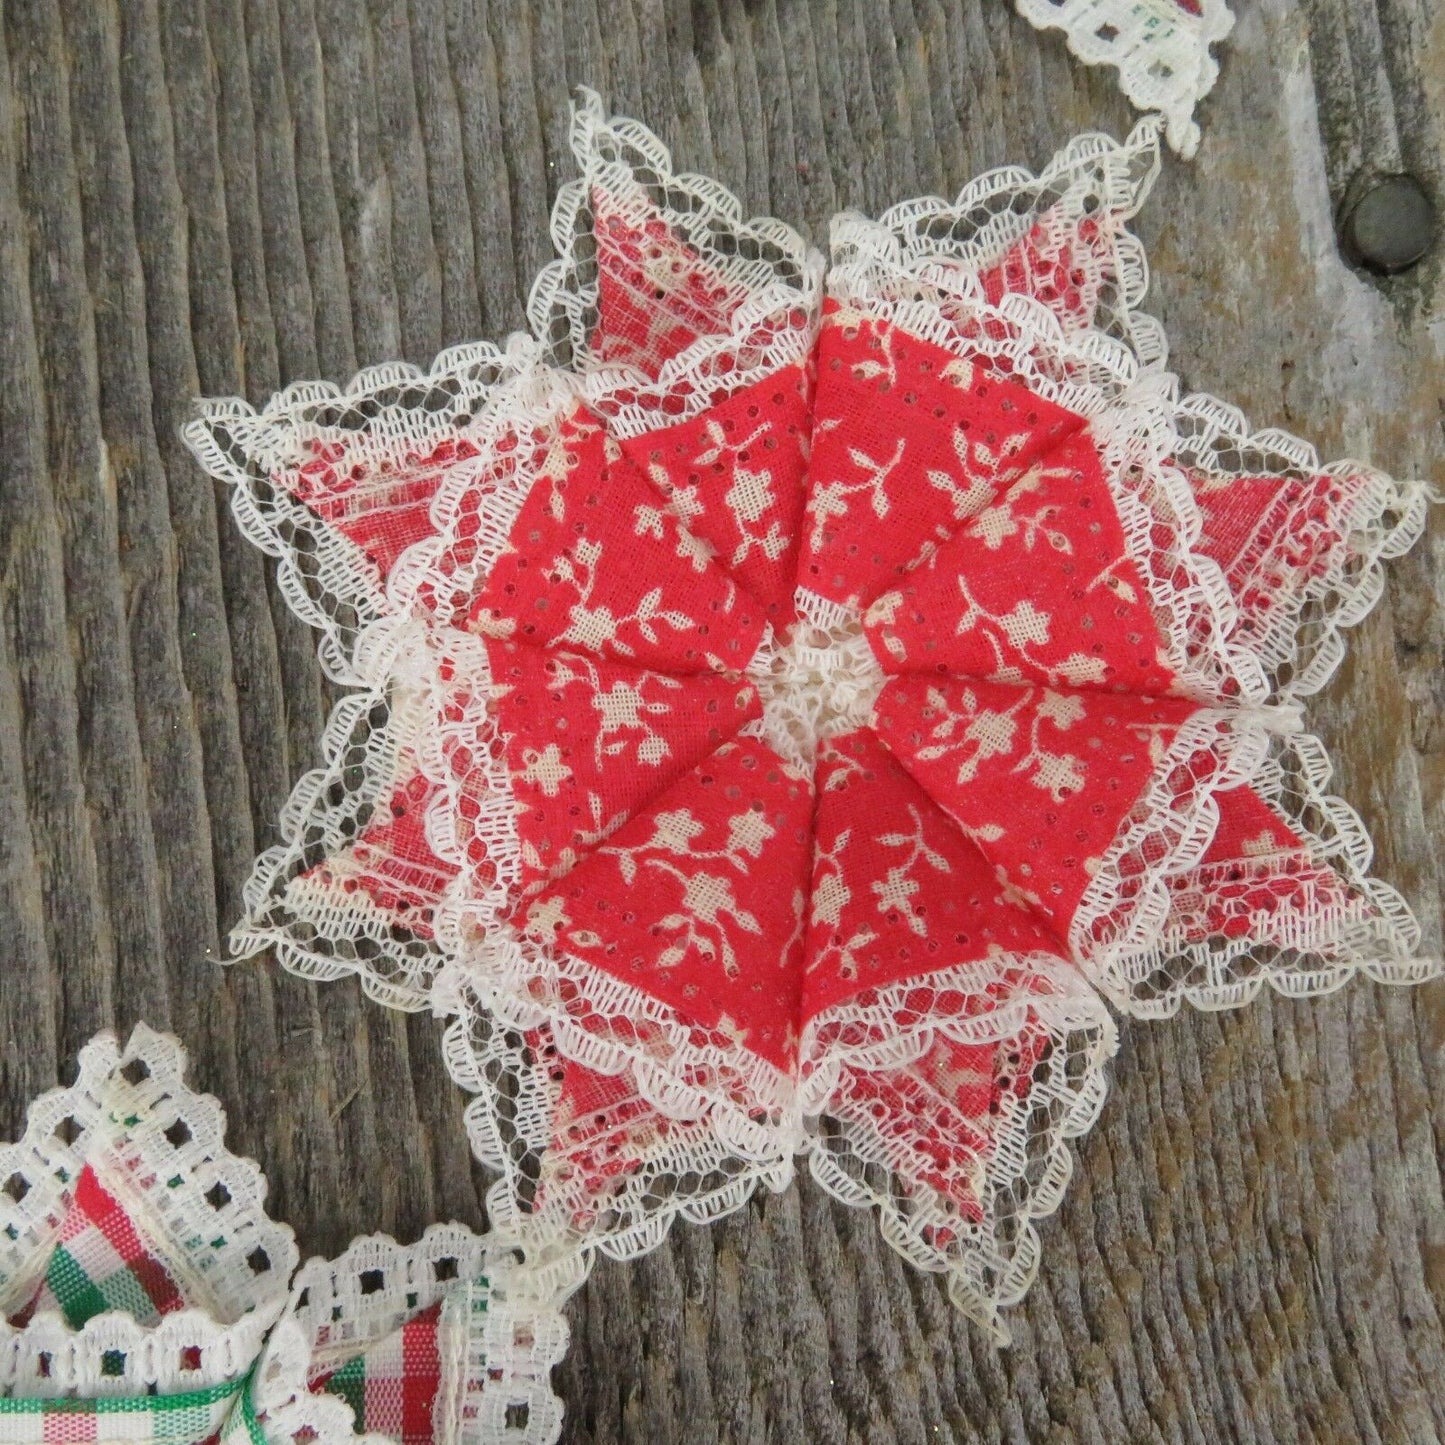 Vintage Star Flower Fabric Ornament Handmade Christmas Lace Poinsettia Lot Set - At Grandma's Table